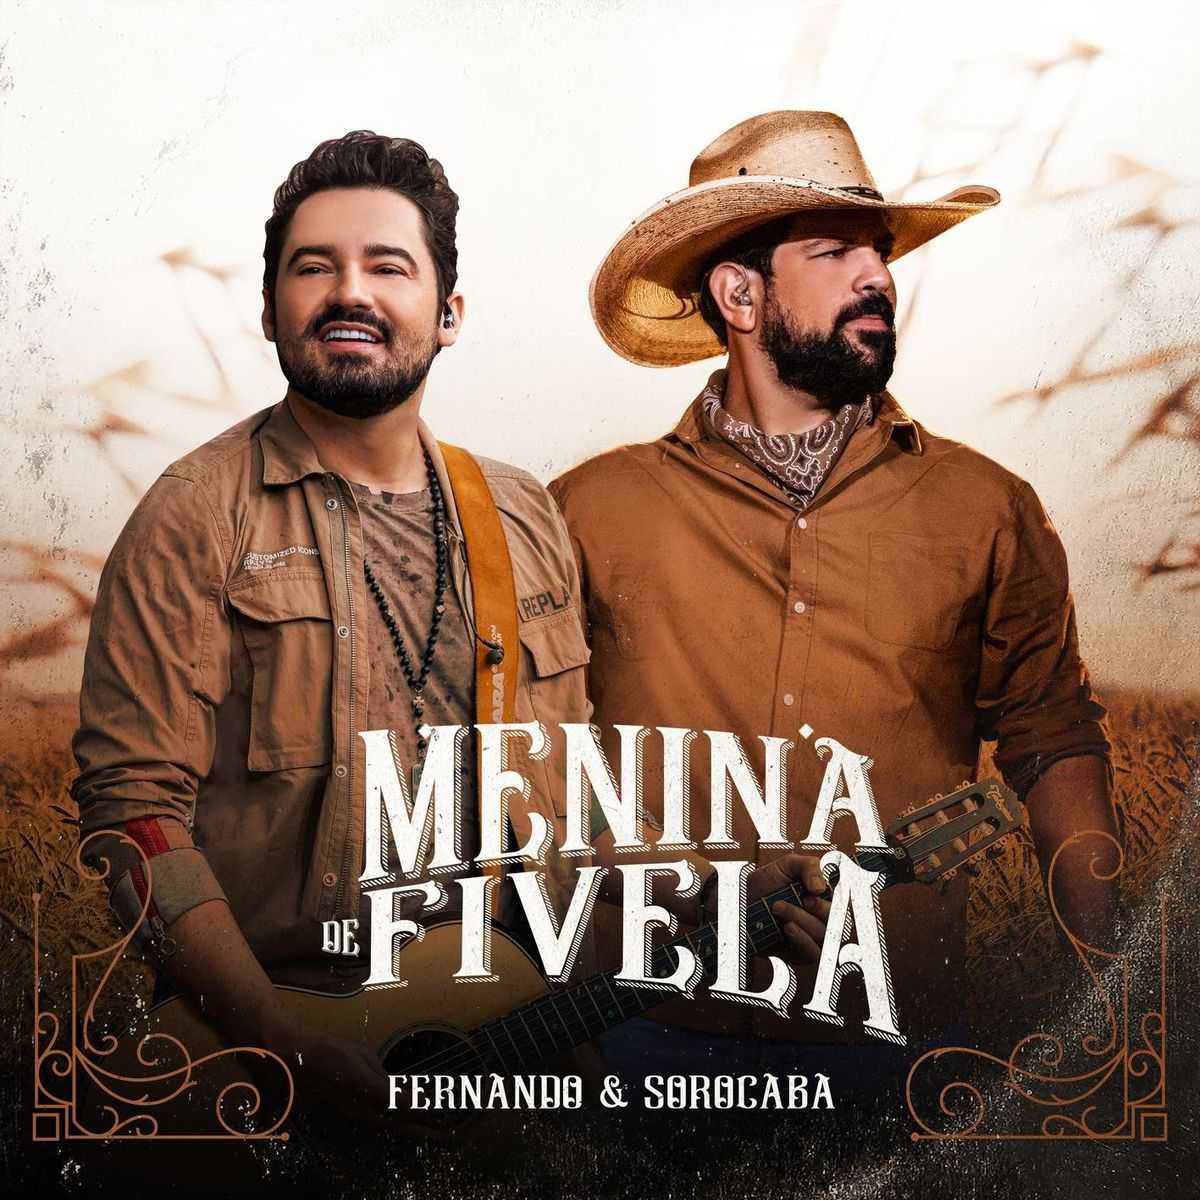 Fernando & Sorocaba - Menina De Fivela